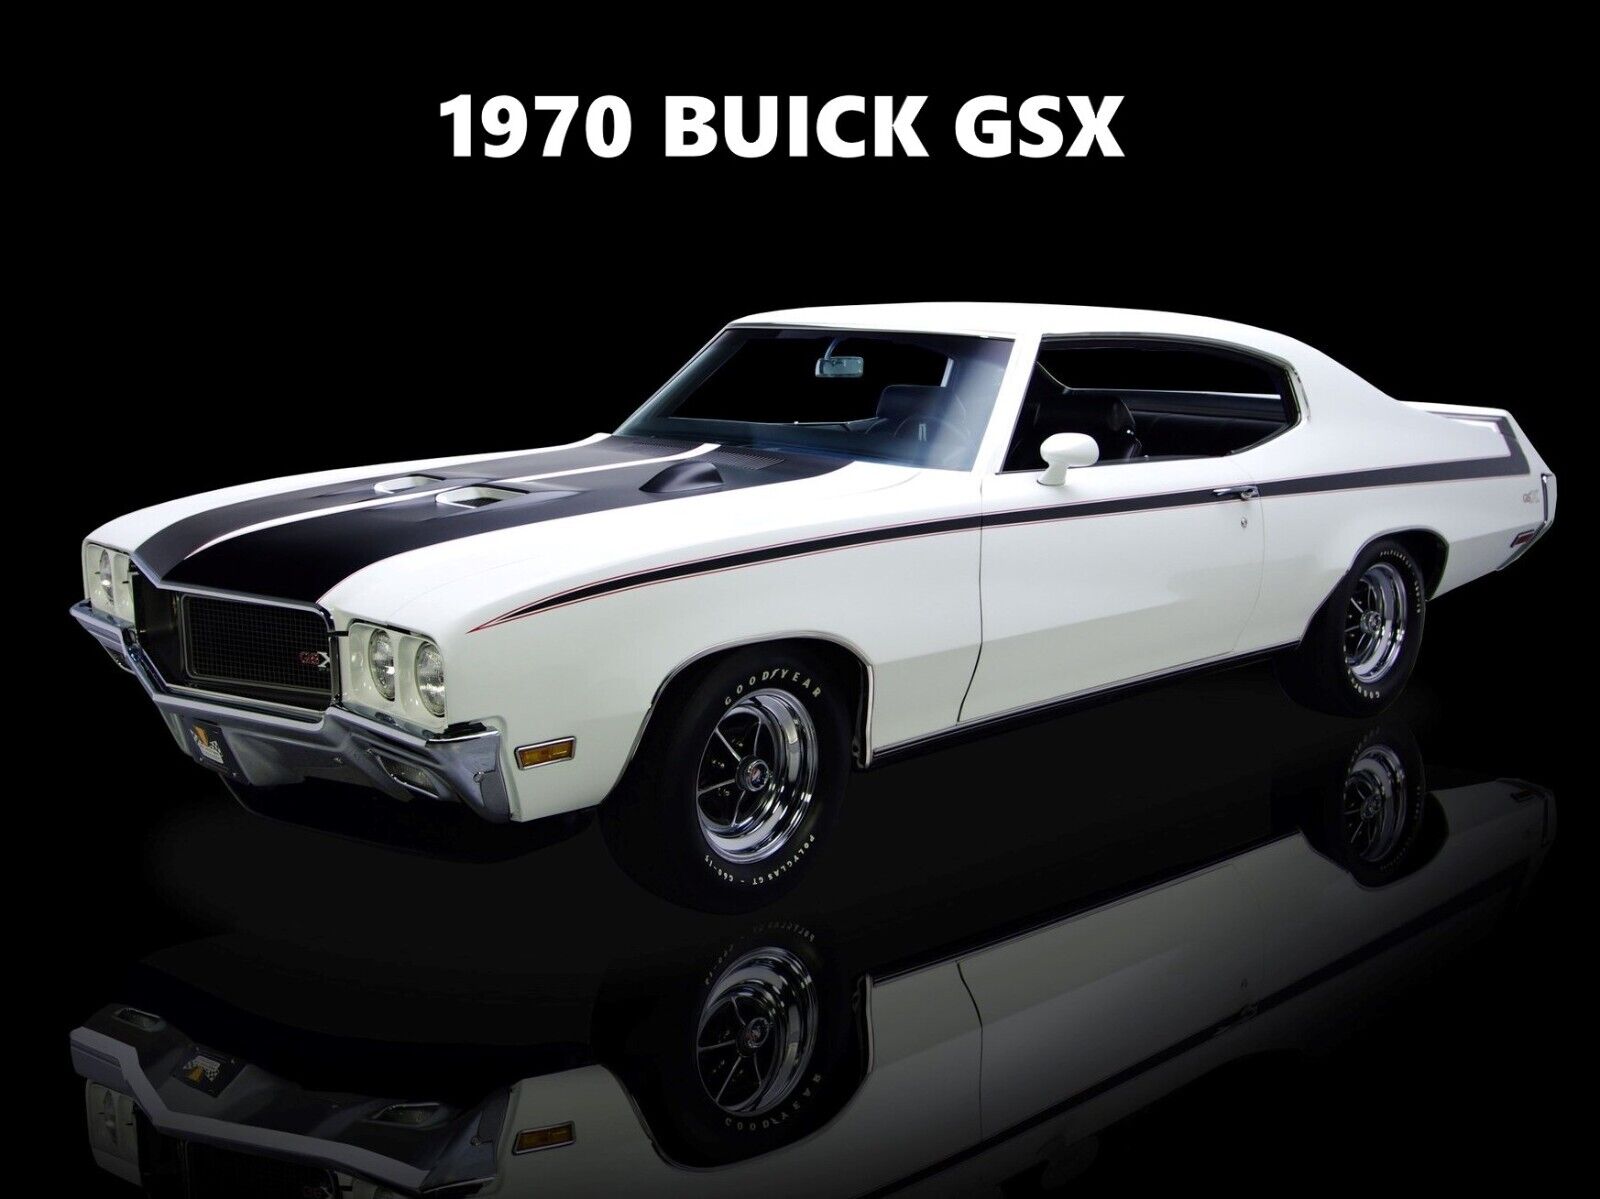 1970 Buick GSX NEW Metal Sign: Original Look in White & Black